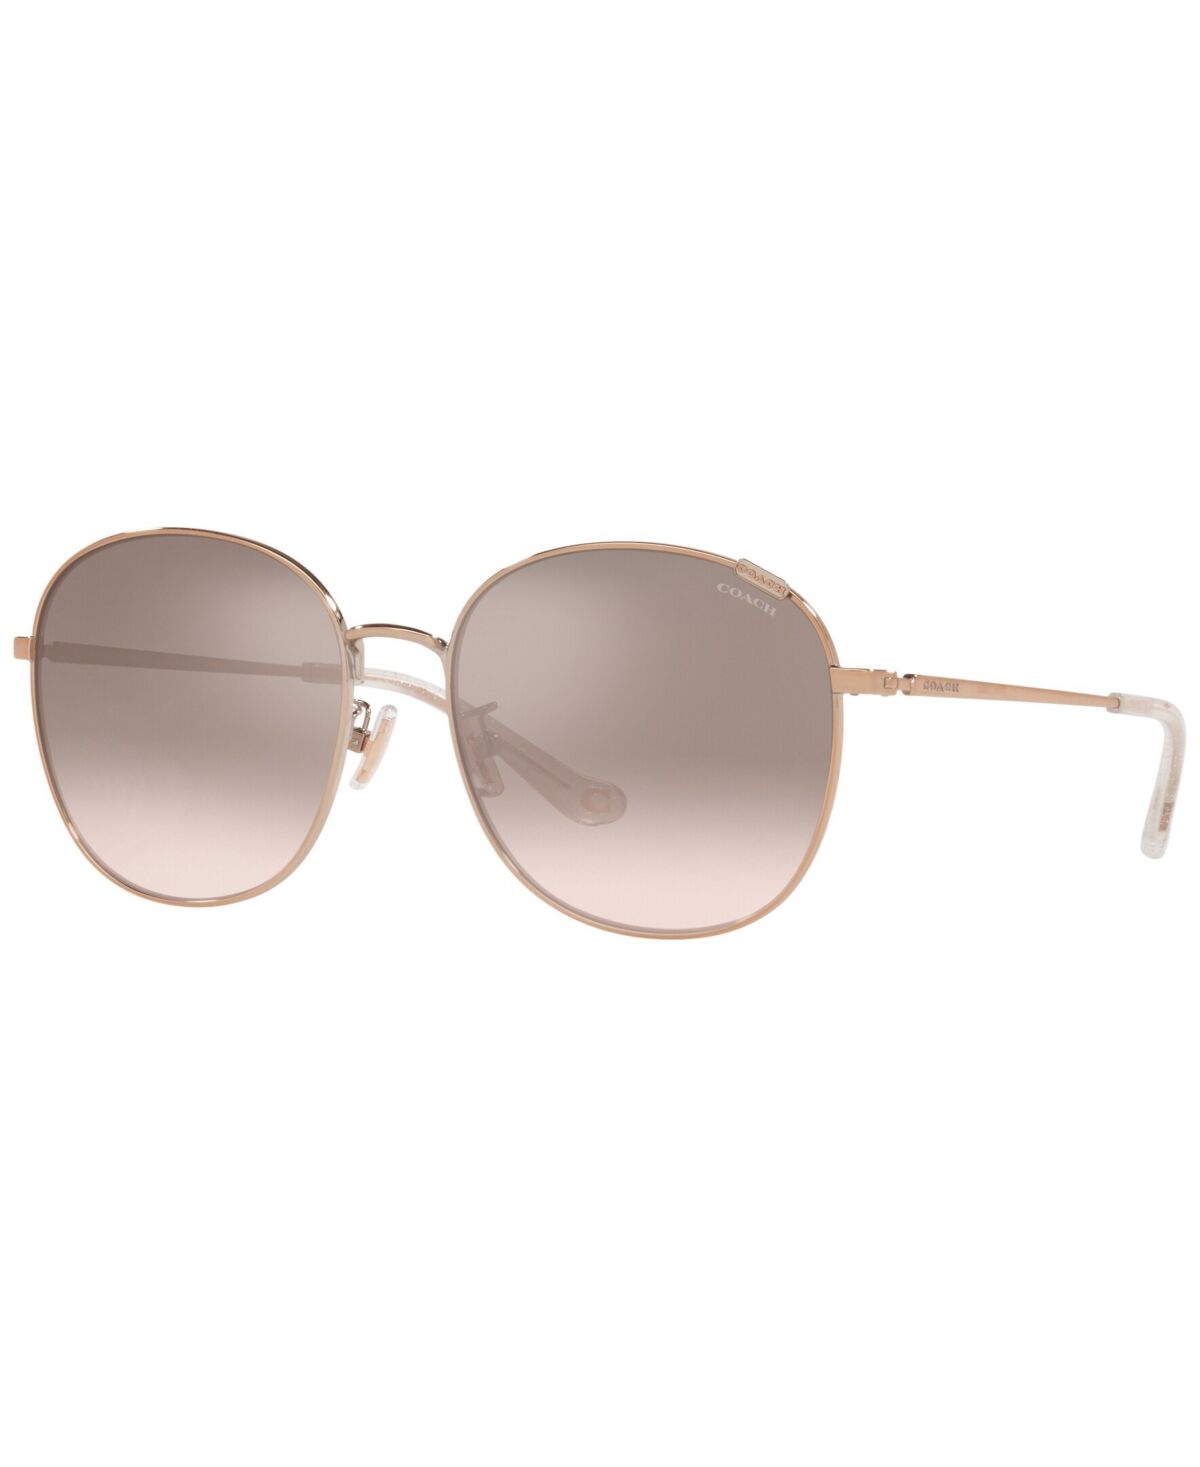 Coach Women's Sunglasses, HC7134 C7996 57 - Shiny Rose Gold-Tone